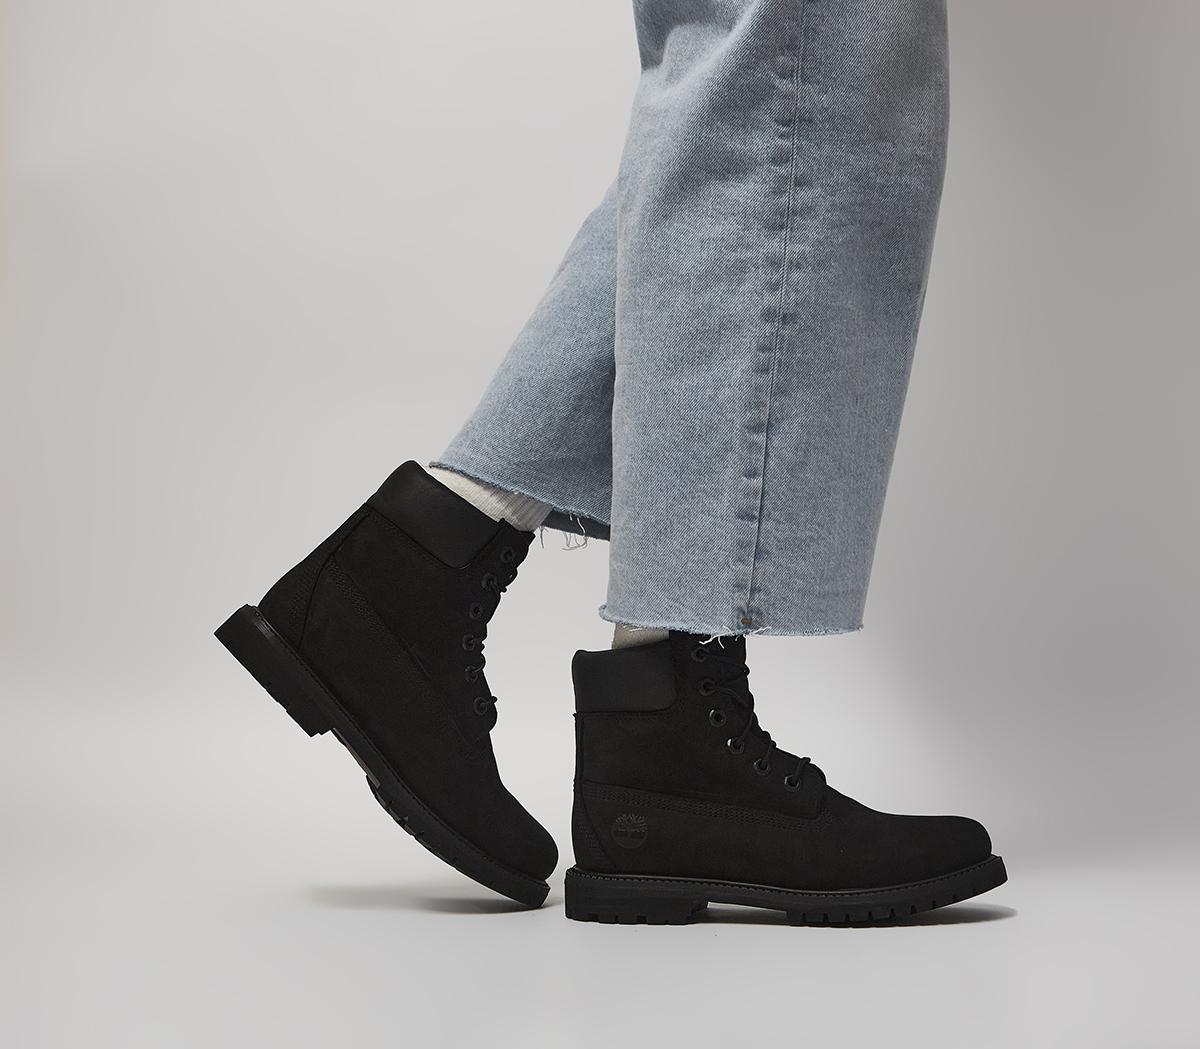 black timberland boots womens